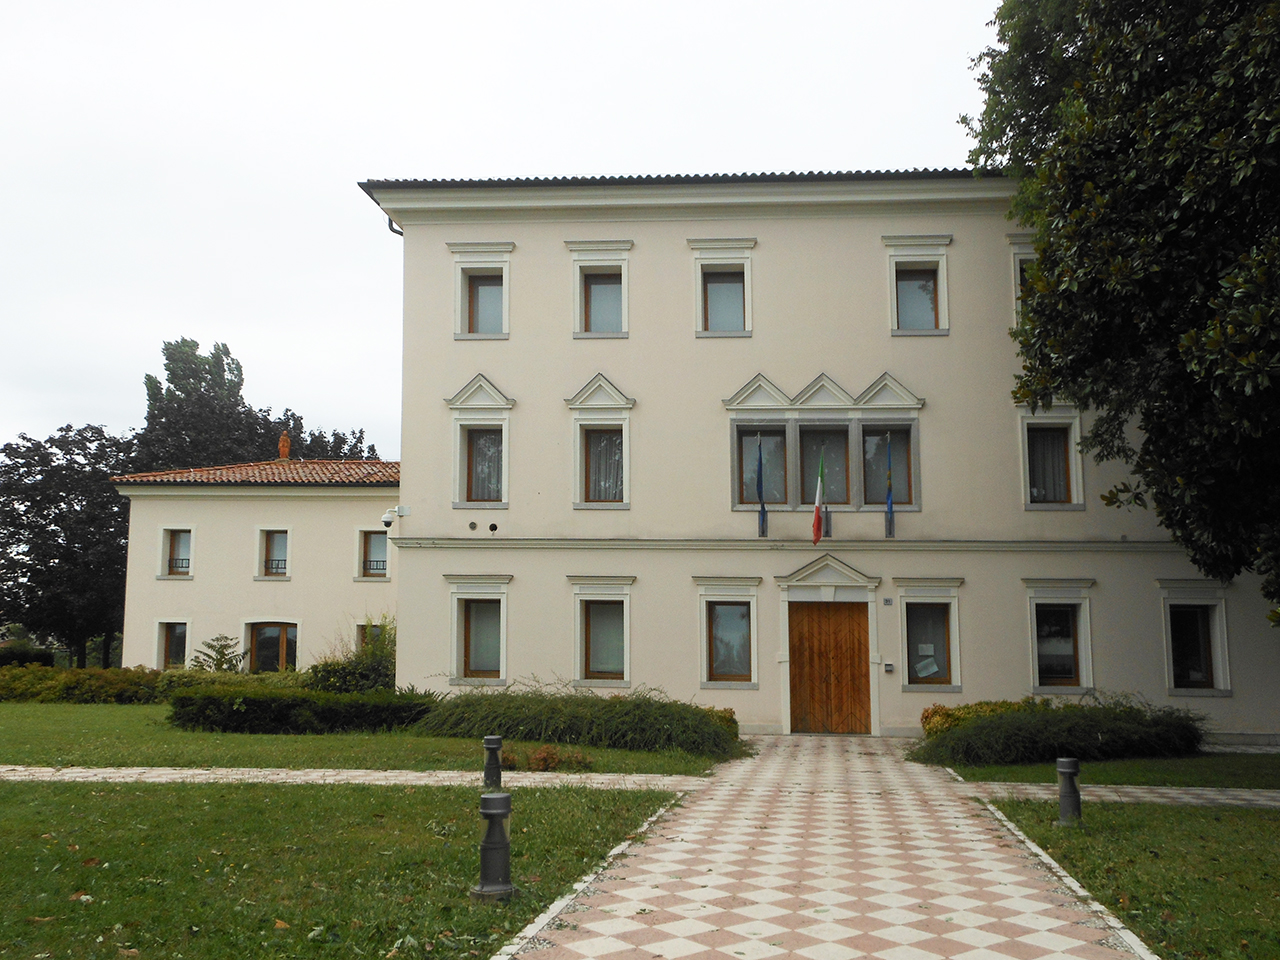 Palazzo Girardi (palazzo, signorile) - Pravisdomini (PN) 